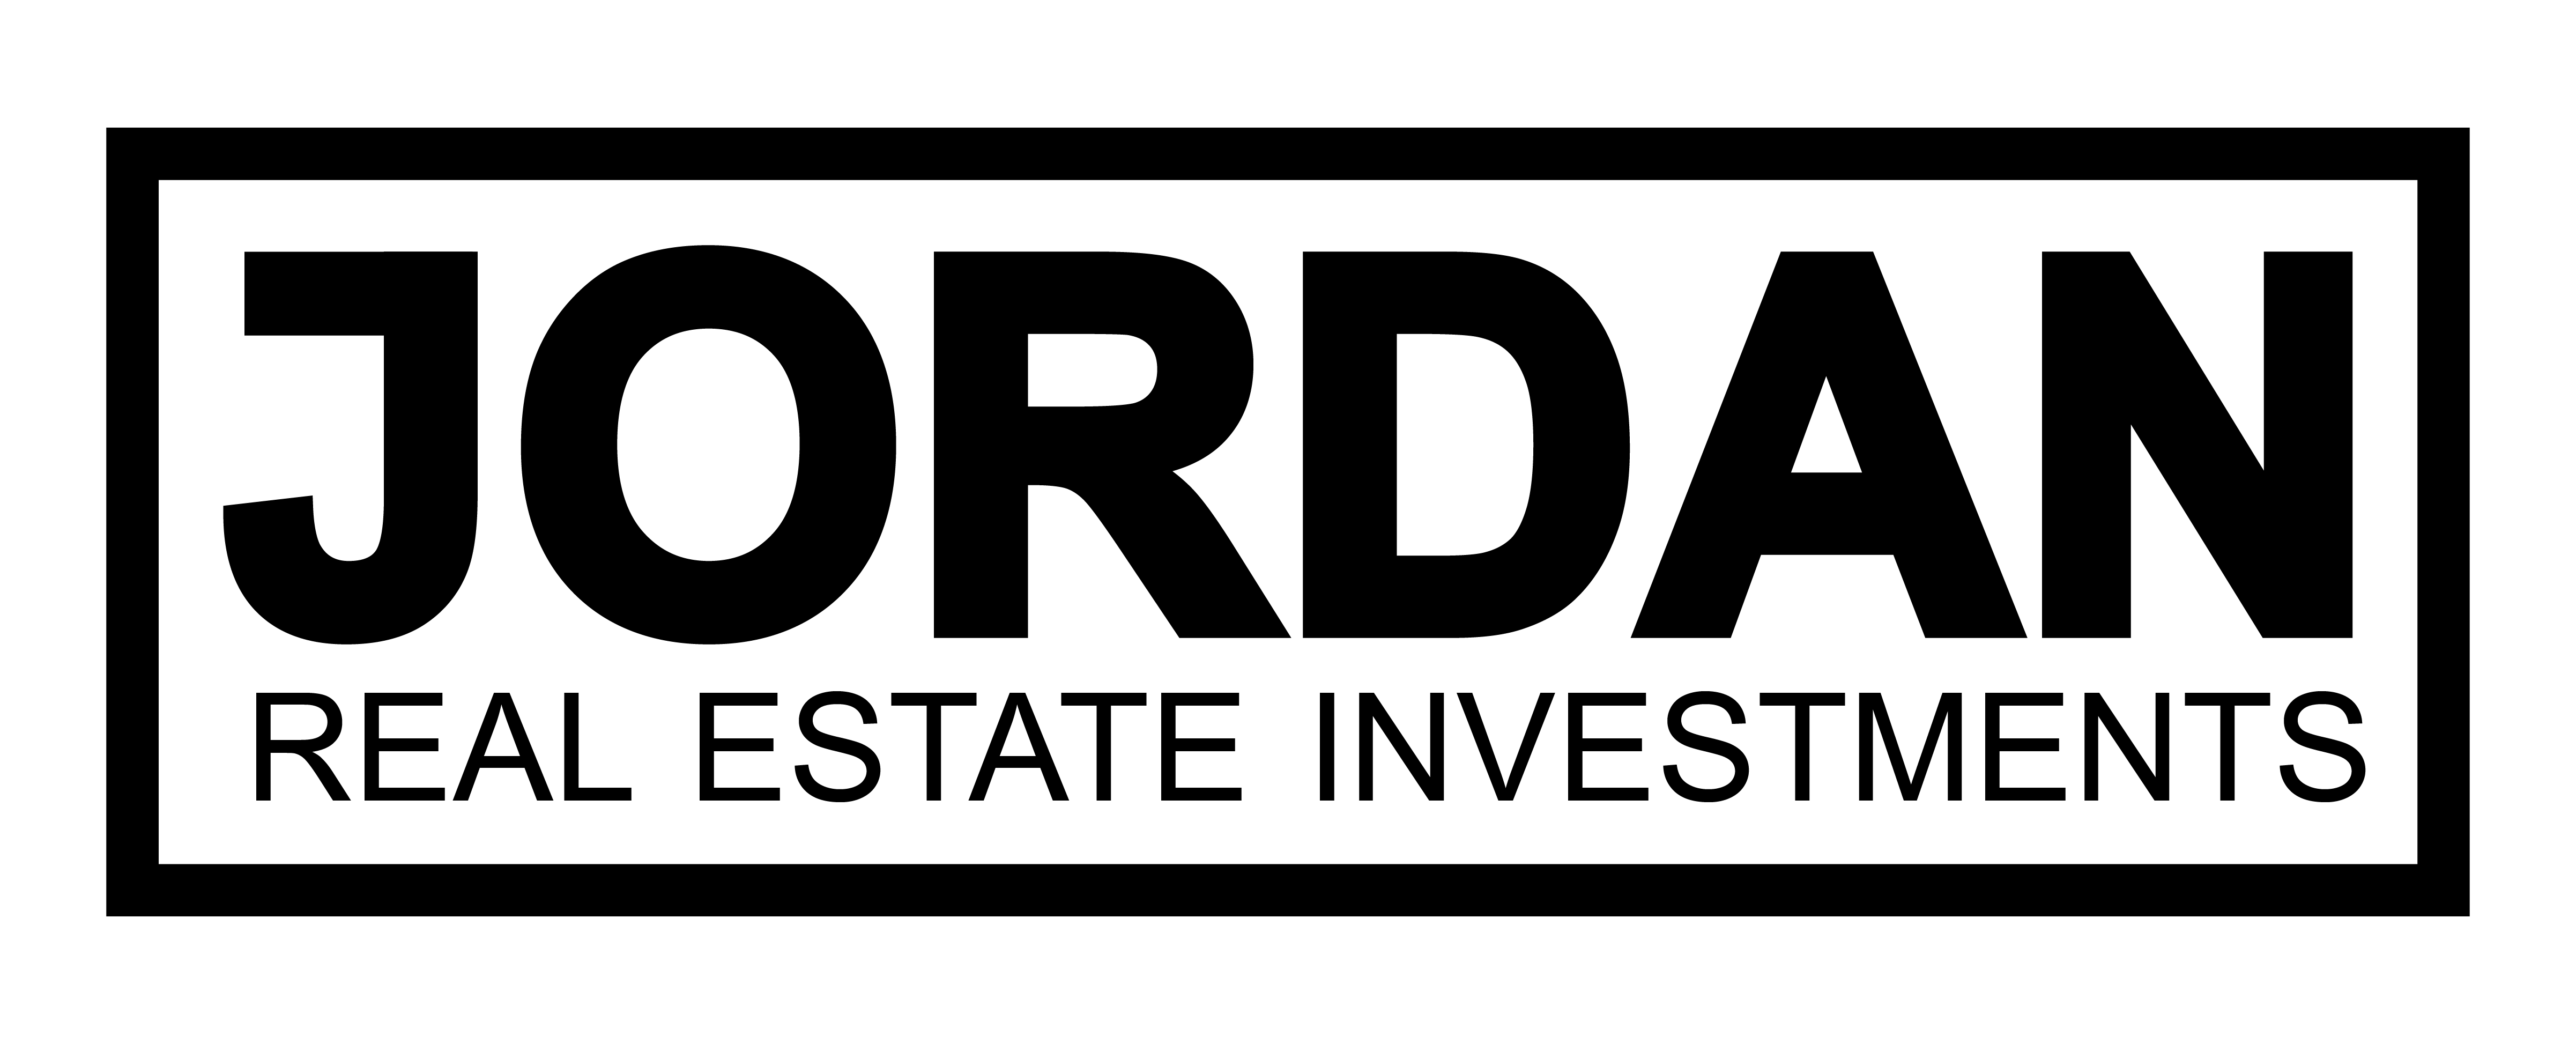 Jordan Real Estate Investments